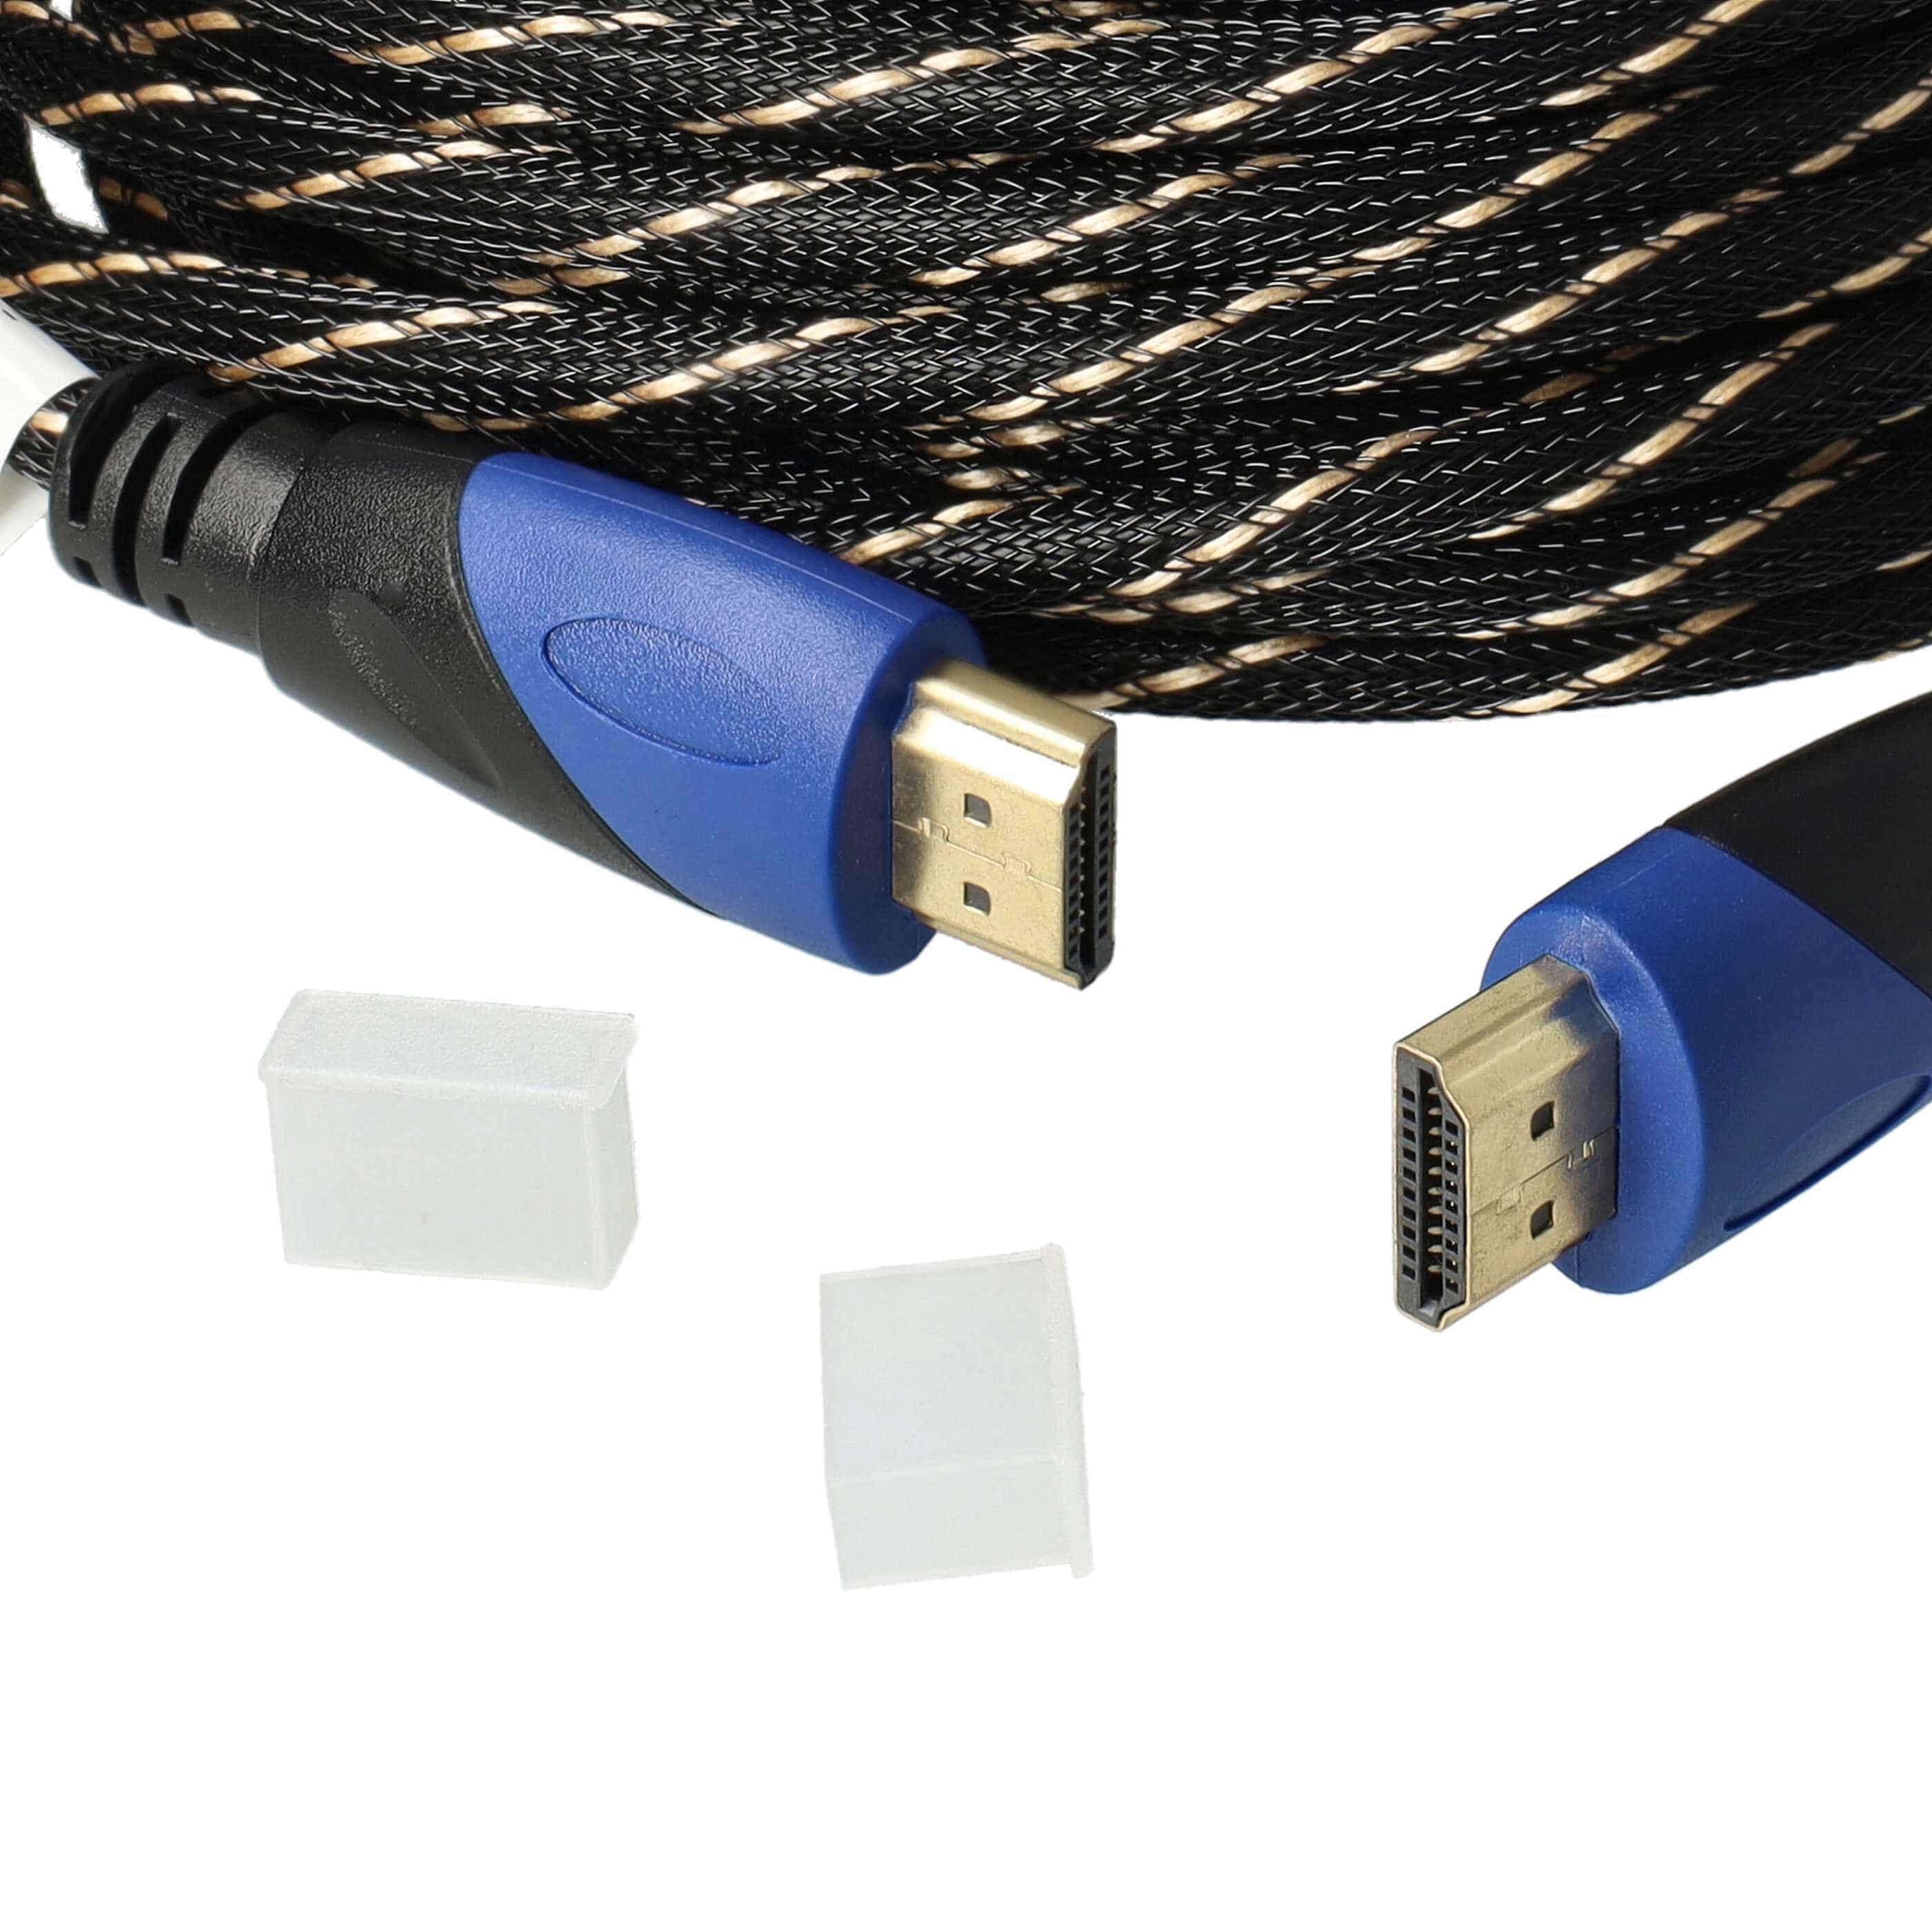 Cable HDMI V1.4 High Speed trenzado10mpara tablets, televisores, TV, Playstation, ordenadores, monitores, DVD,